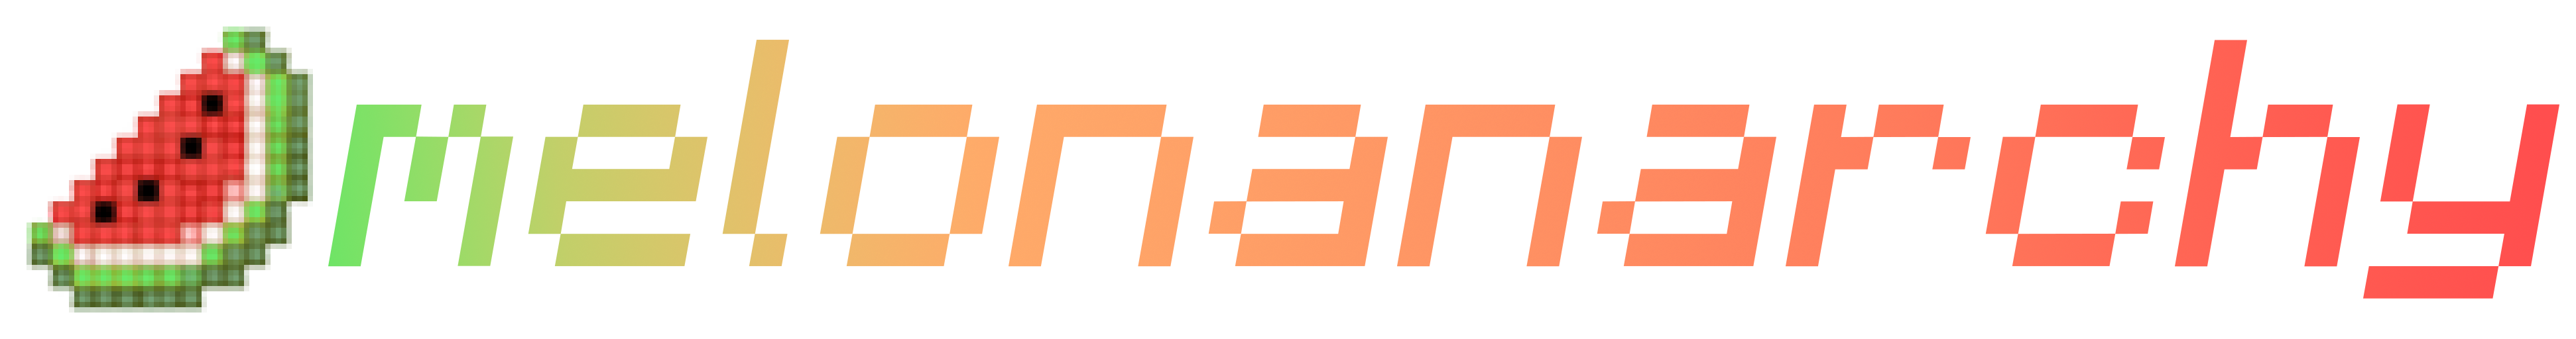 melonanarchy logo